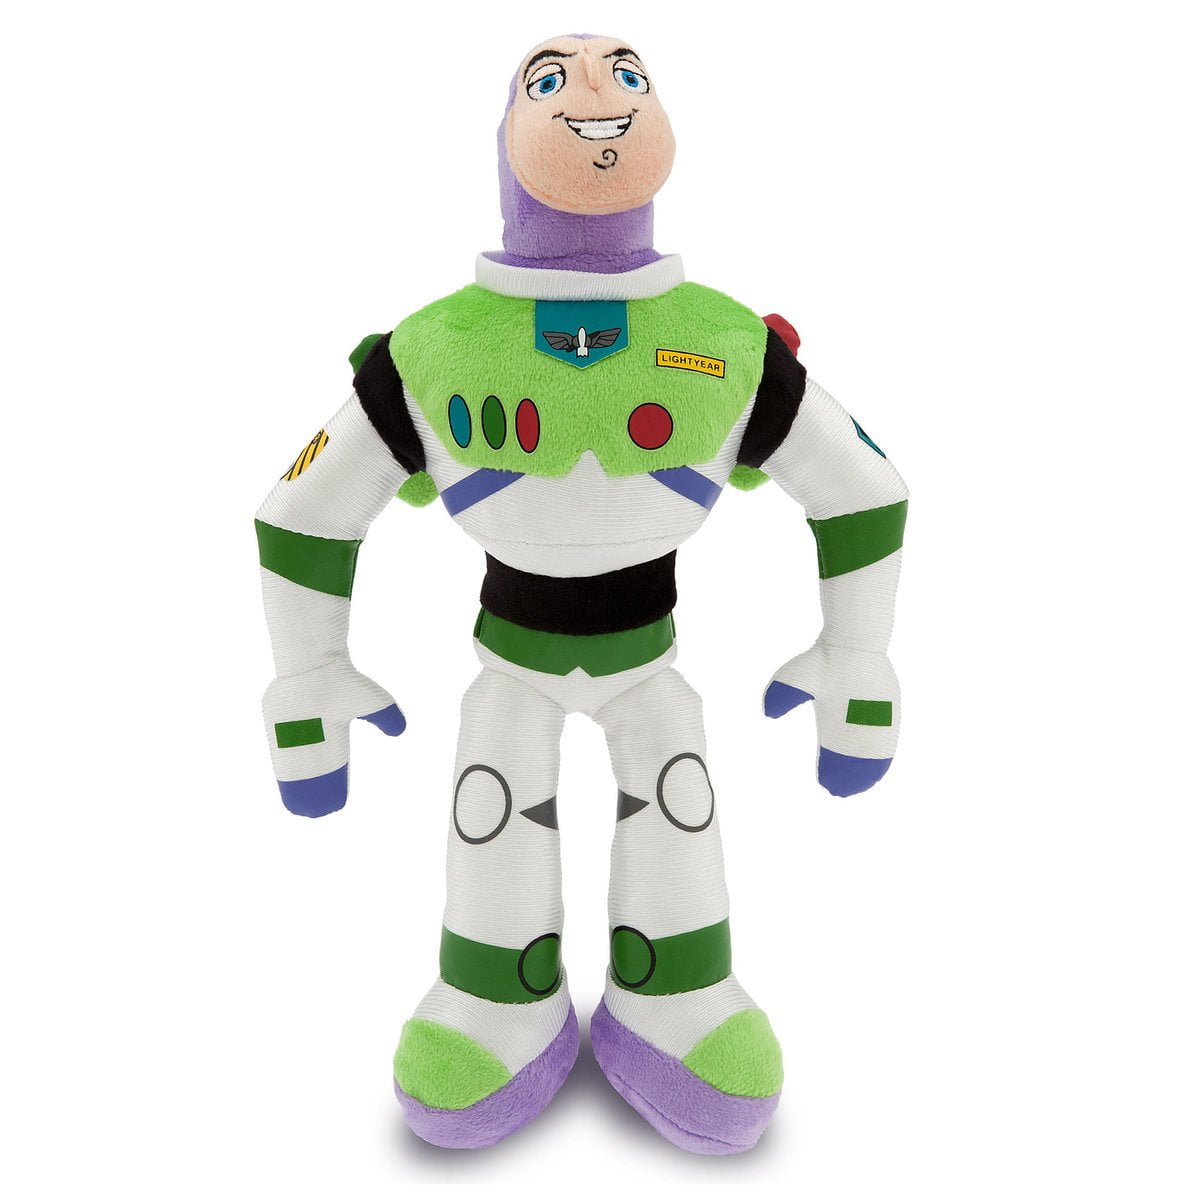 Details about   New Disney Store Pixar Toy Story Buzz Lightyear 8" Mini Bean Bag Plush Doll